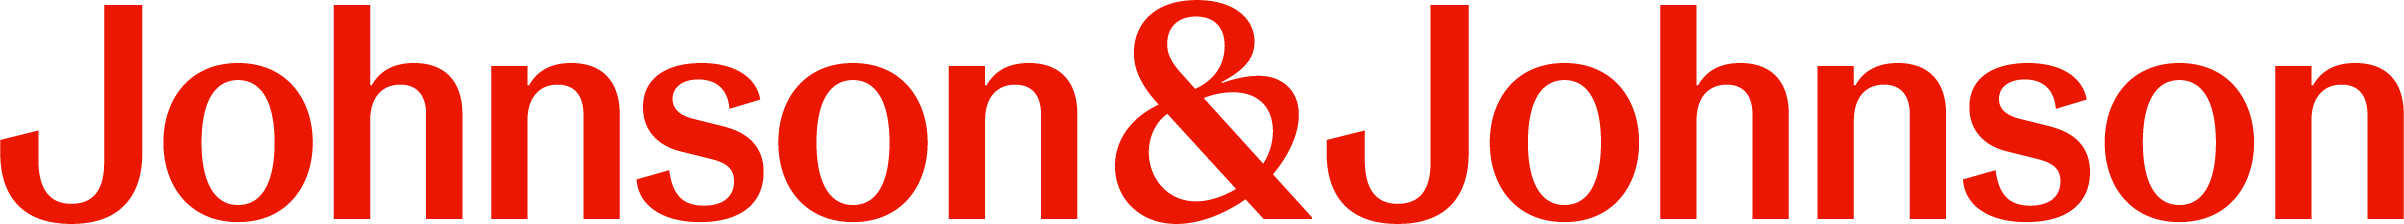 J&J Logo.png